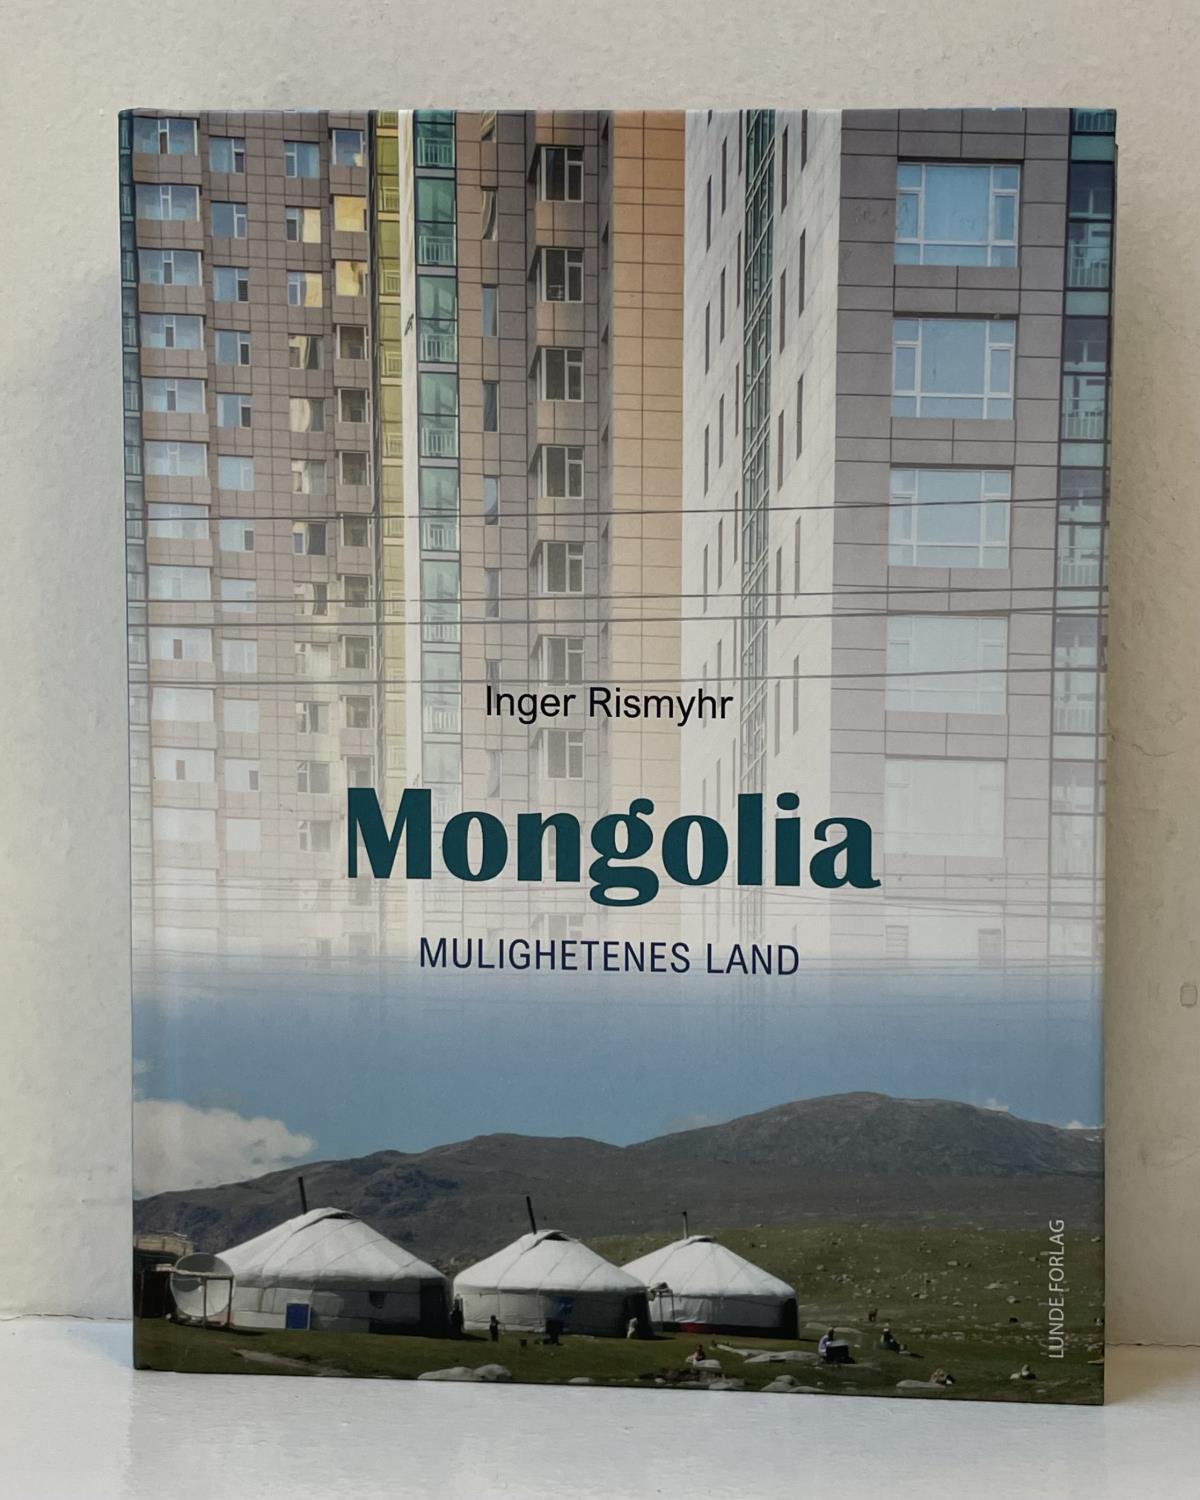 Mongolia - Mulighetenes land